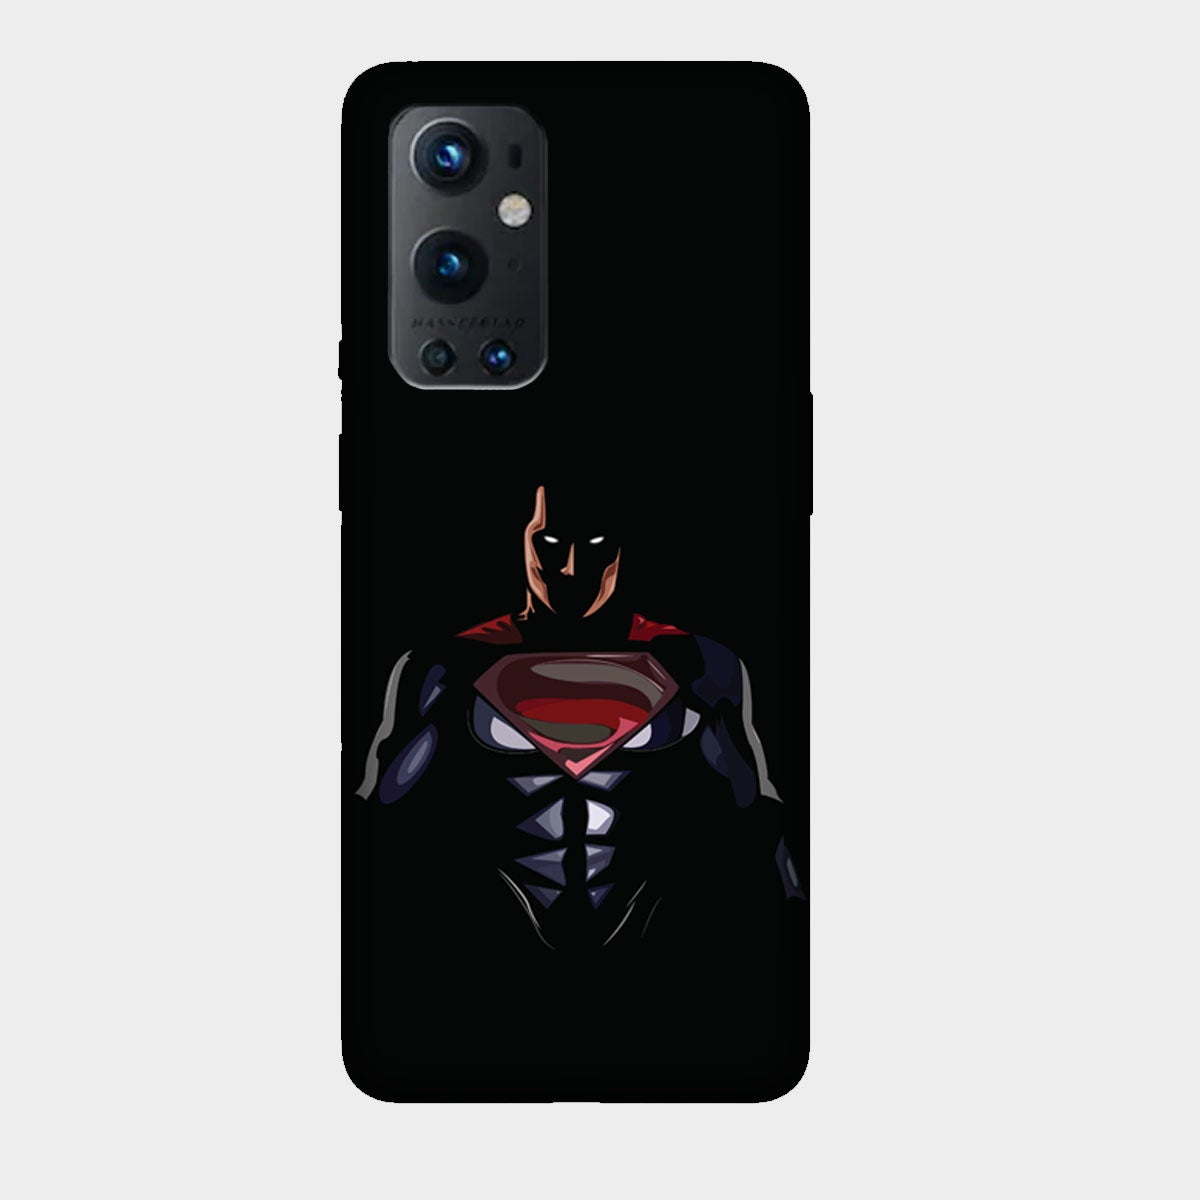 Superman - Man of Steel - Minimalist - Mobile Phone Cover - Hard Case - OnePlus